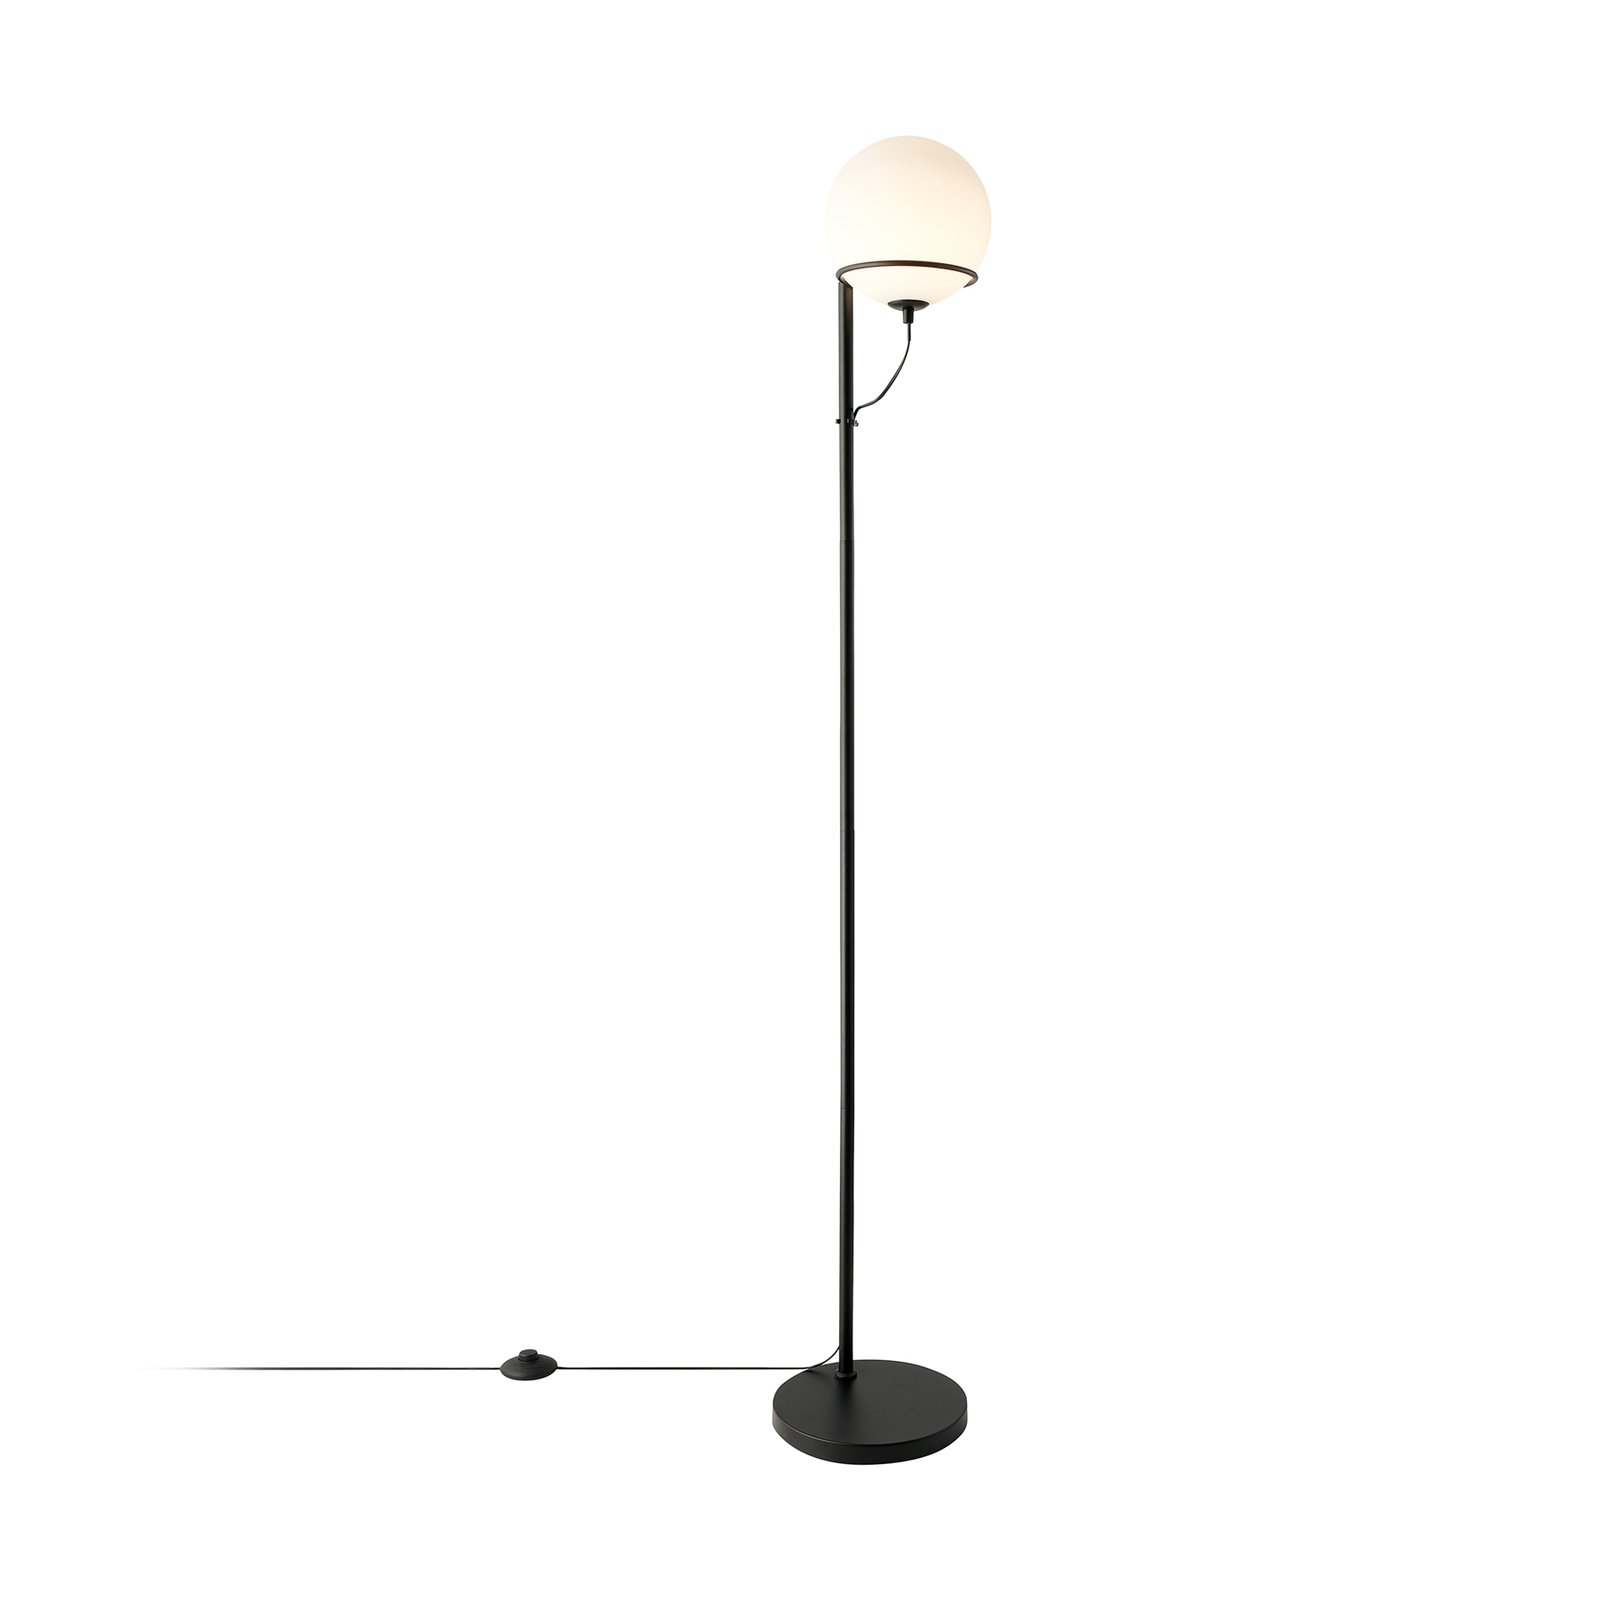 Wilson floor lamp, metal, black, glass globe shade